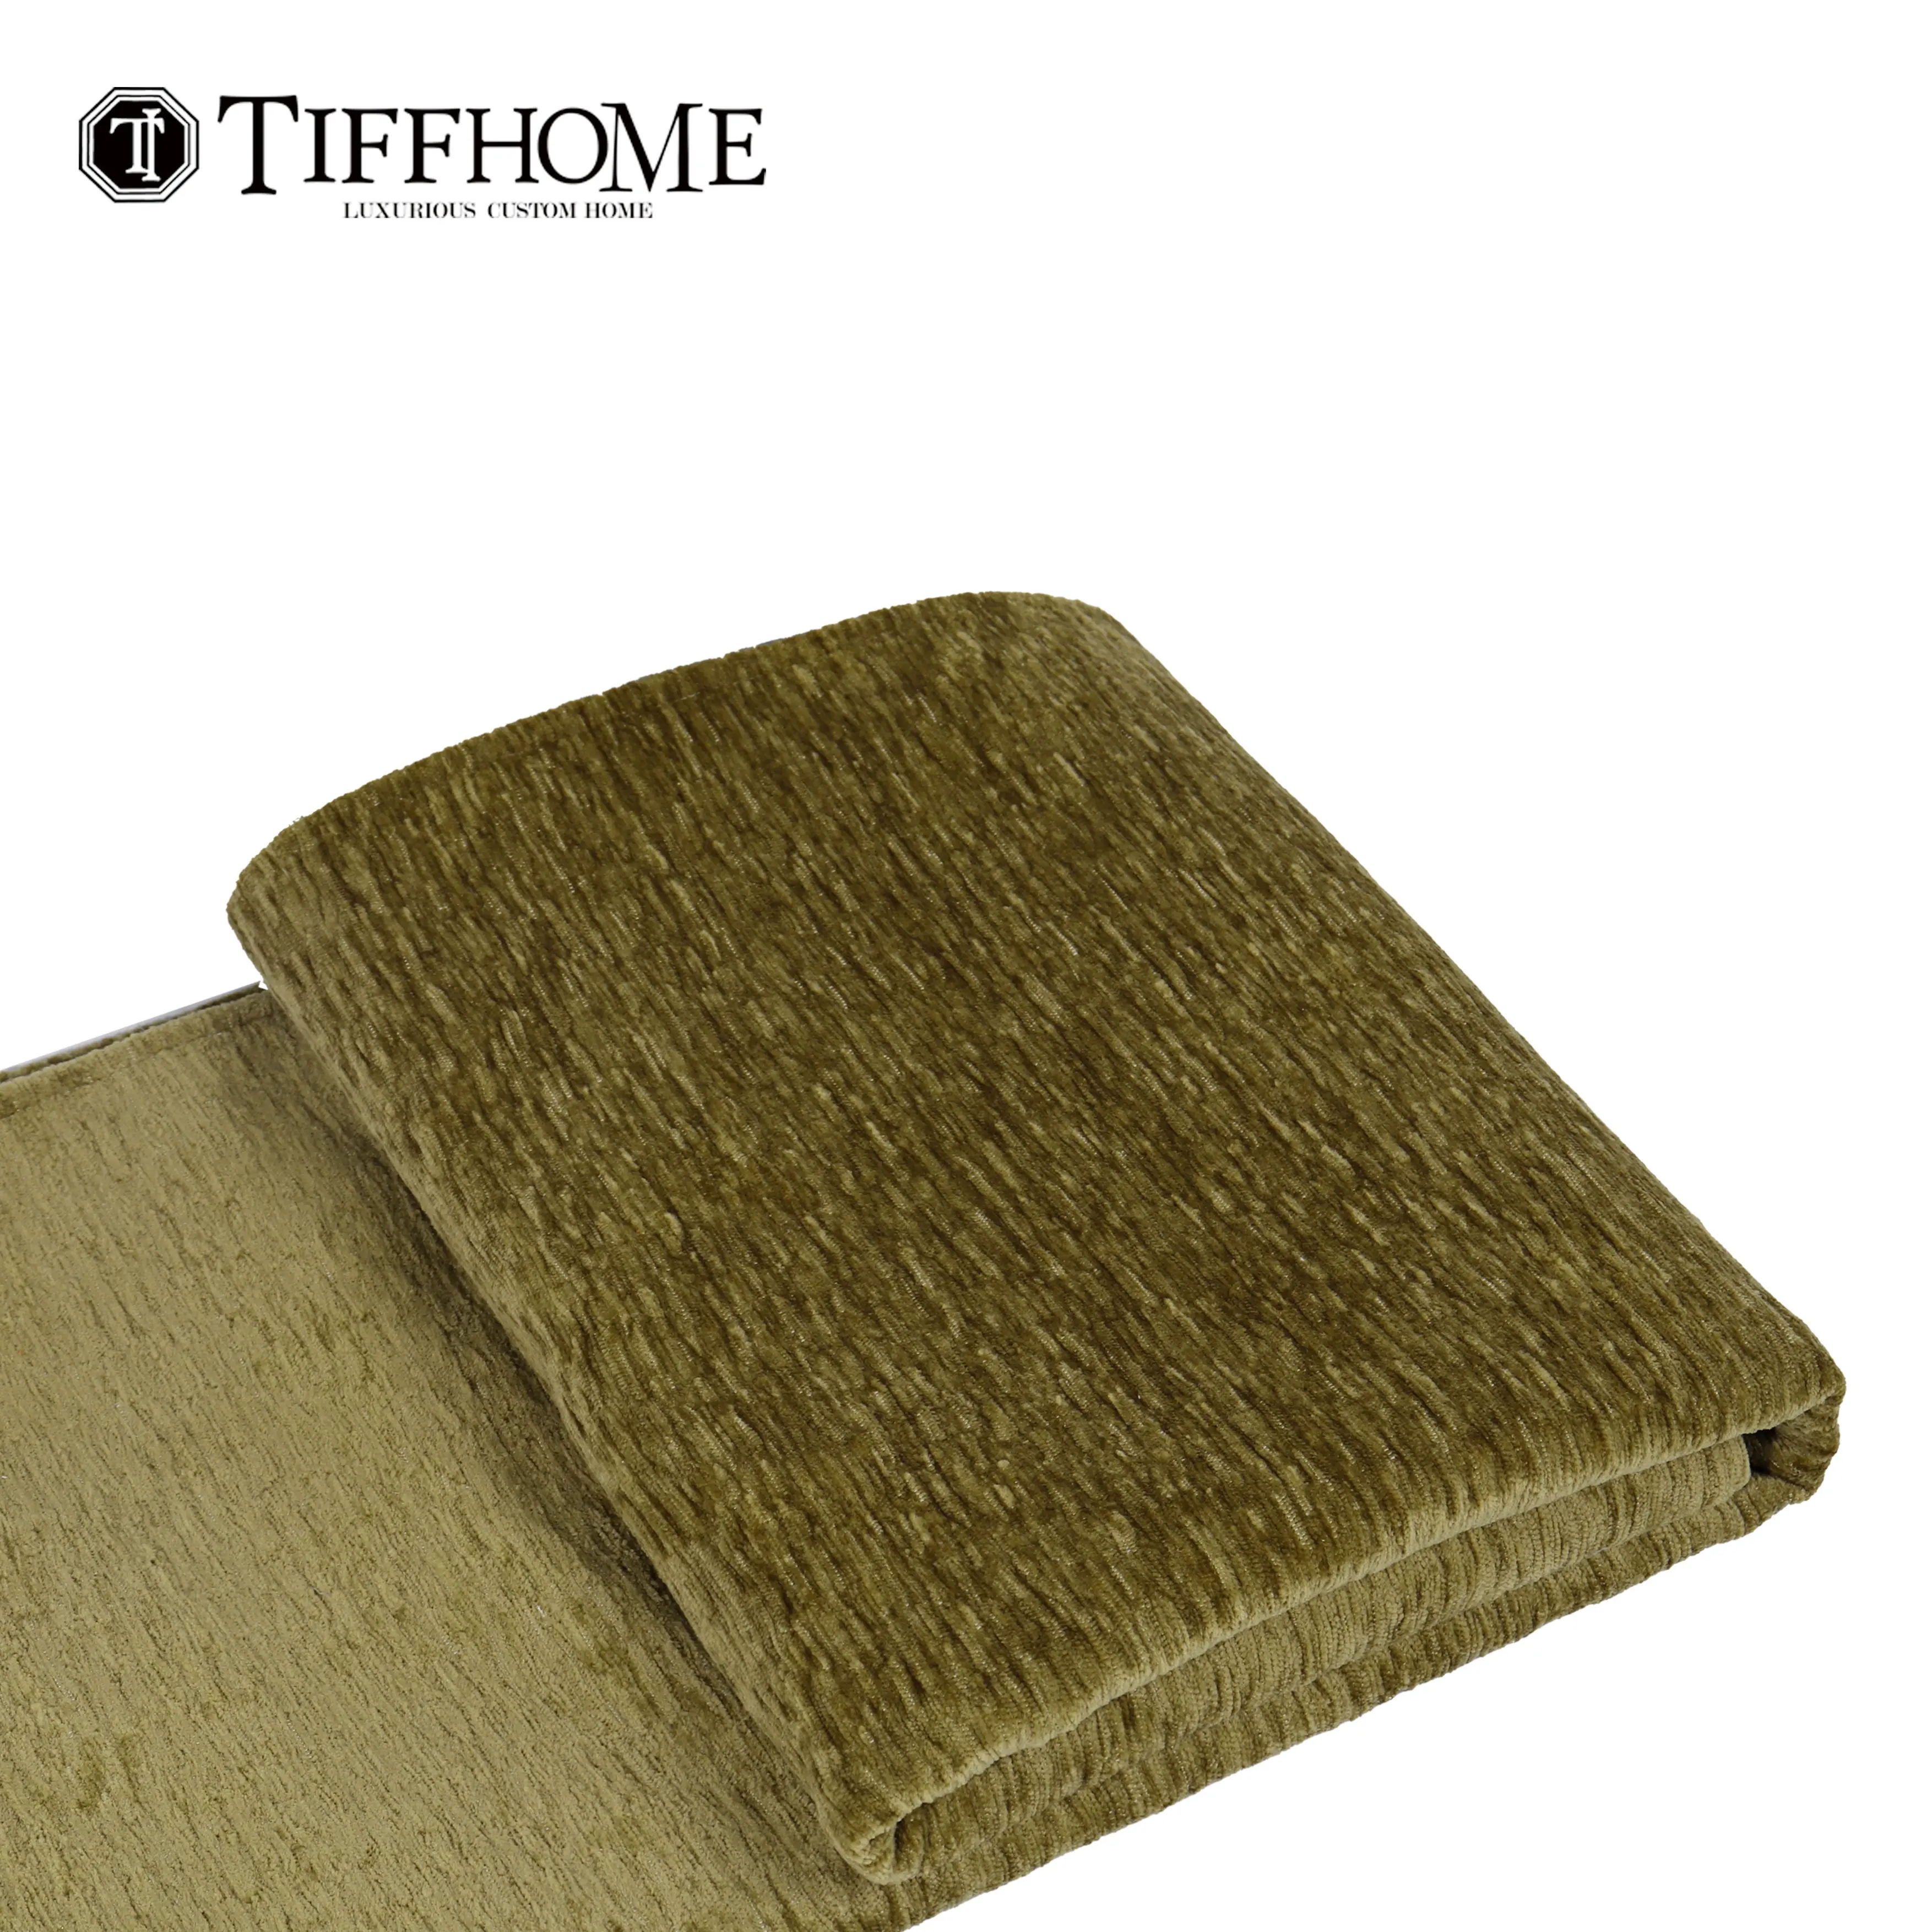 Tiff Home New Design Wholesale 240*70cm Eco-Friendly Green Texture Velvet Bed Throw Blanket For All Seasons